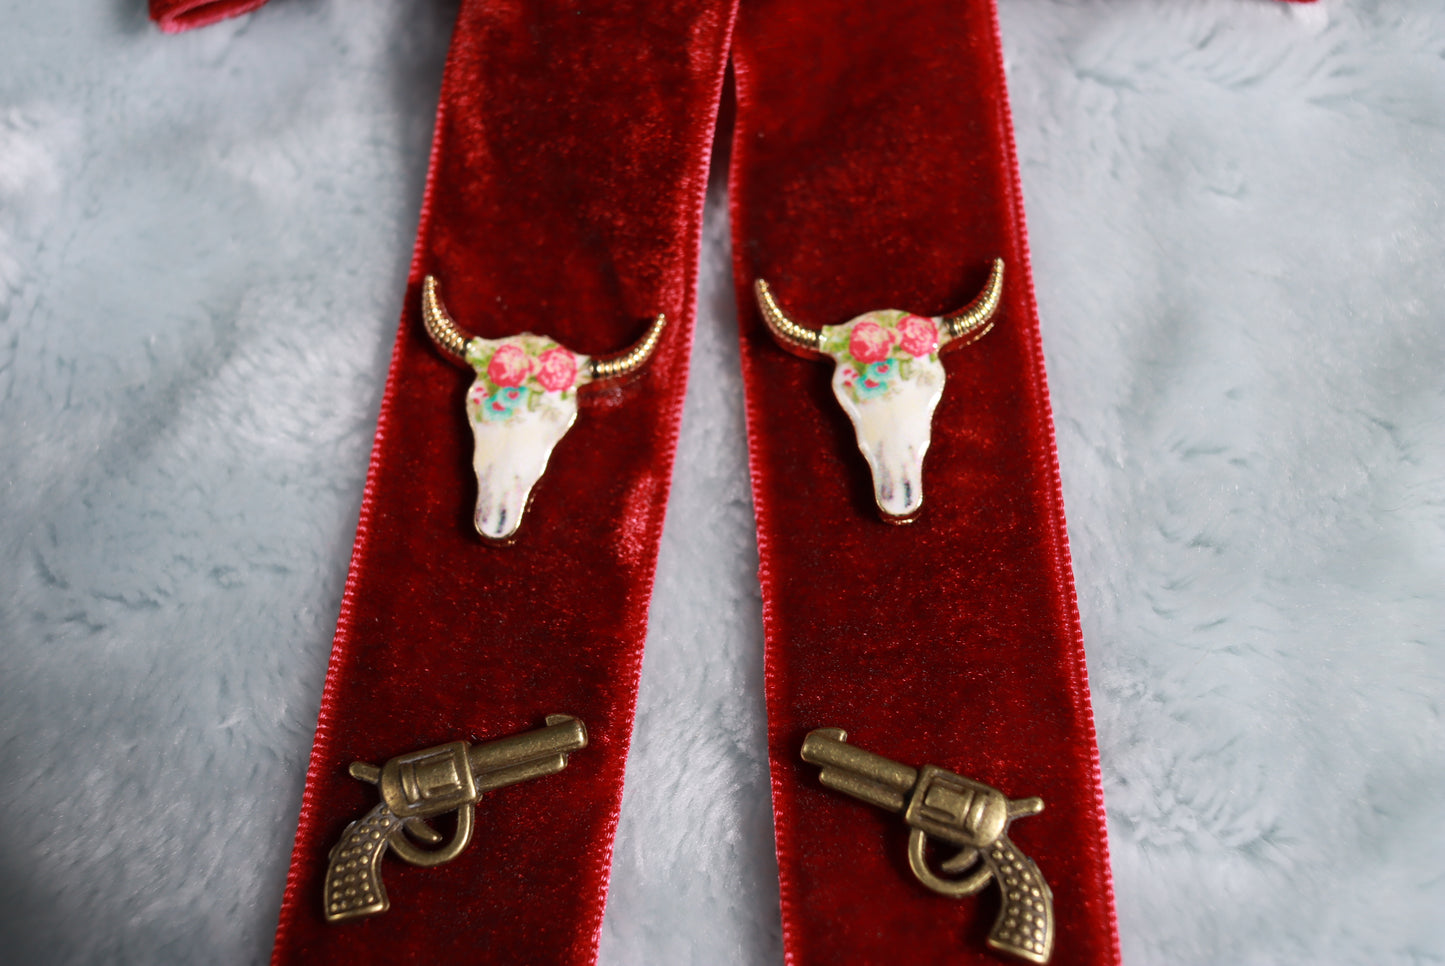 New Burgundy Velvet Steers and Pistols Western Kentucky Bow Tie